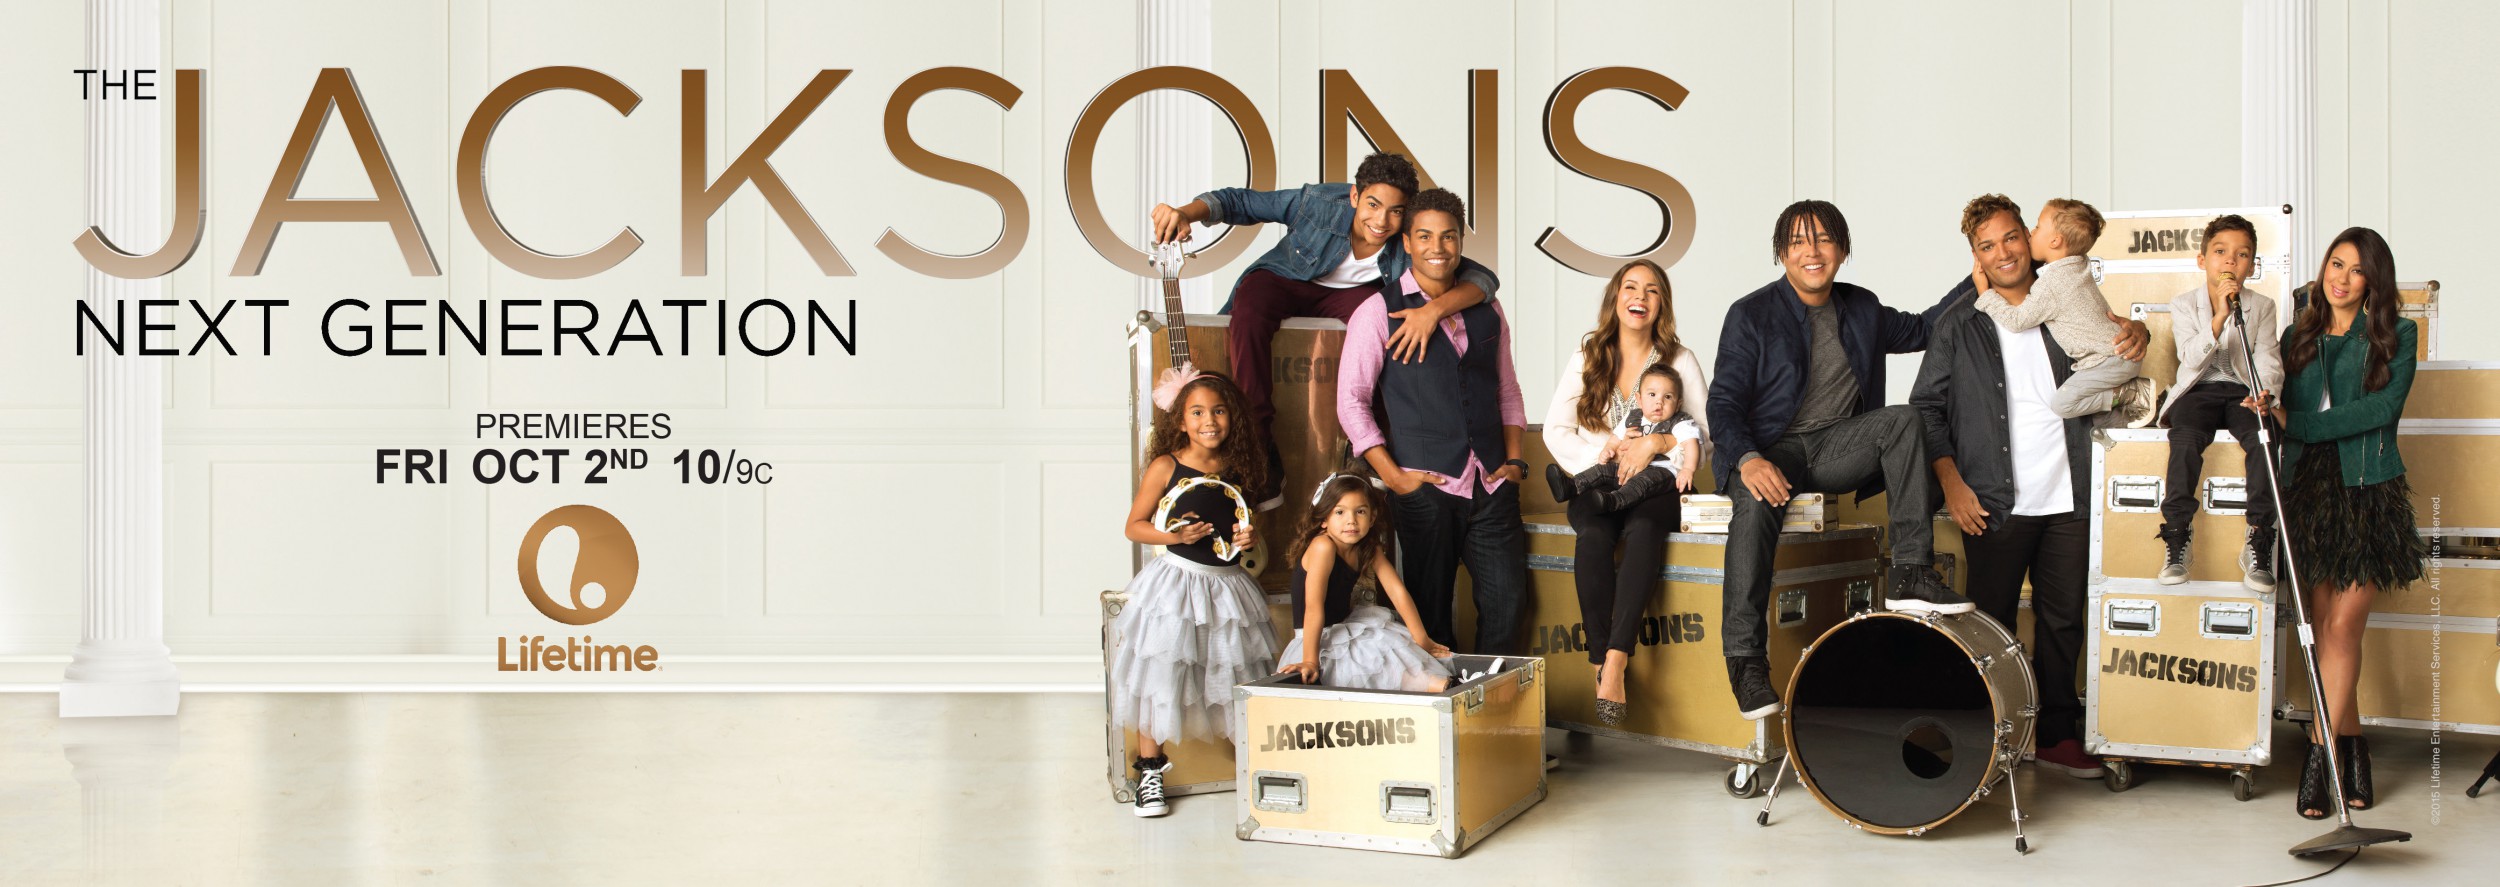 Mega Sized TV Poster Image for The Jacksons: Next Generation (#2 of 2)